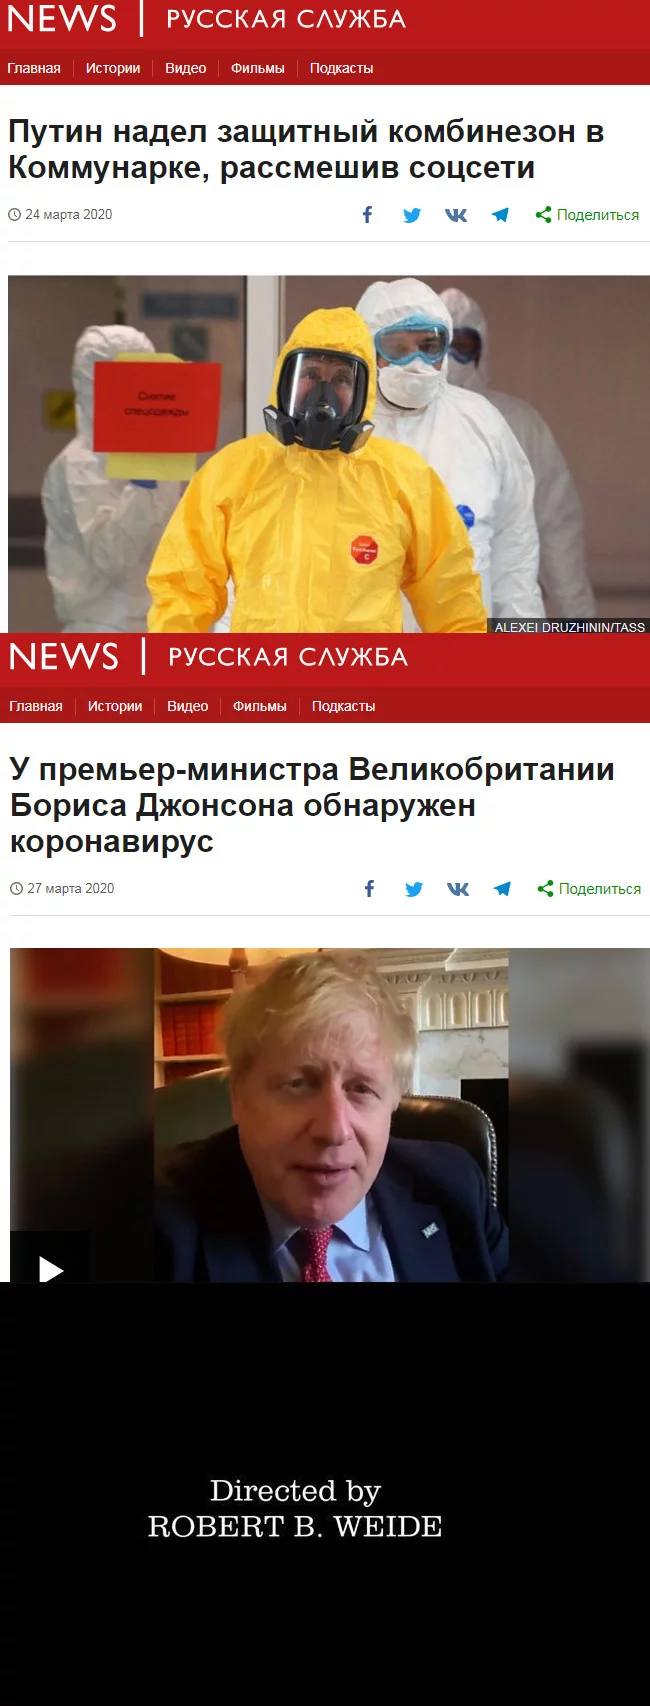 The main thing is not to make social networks laugh - Politics, Vladimir Putin, Boris Johnson, Coronavirus, Longpost, BBC, Screenshot